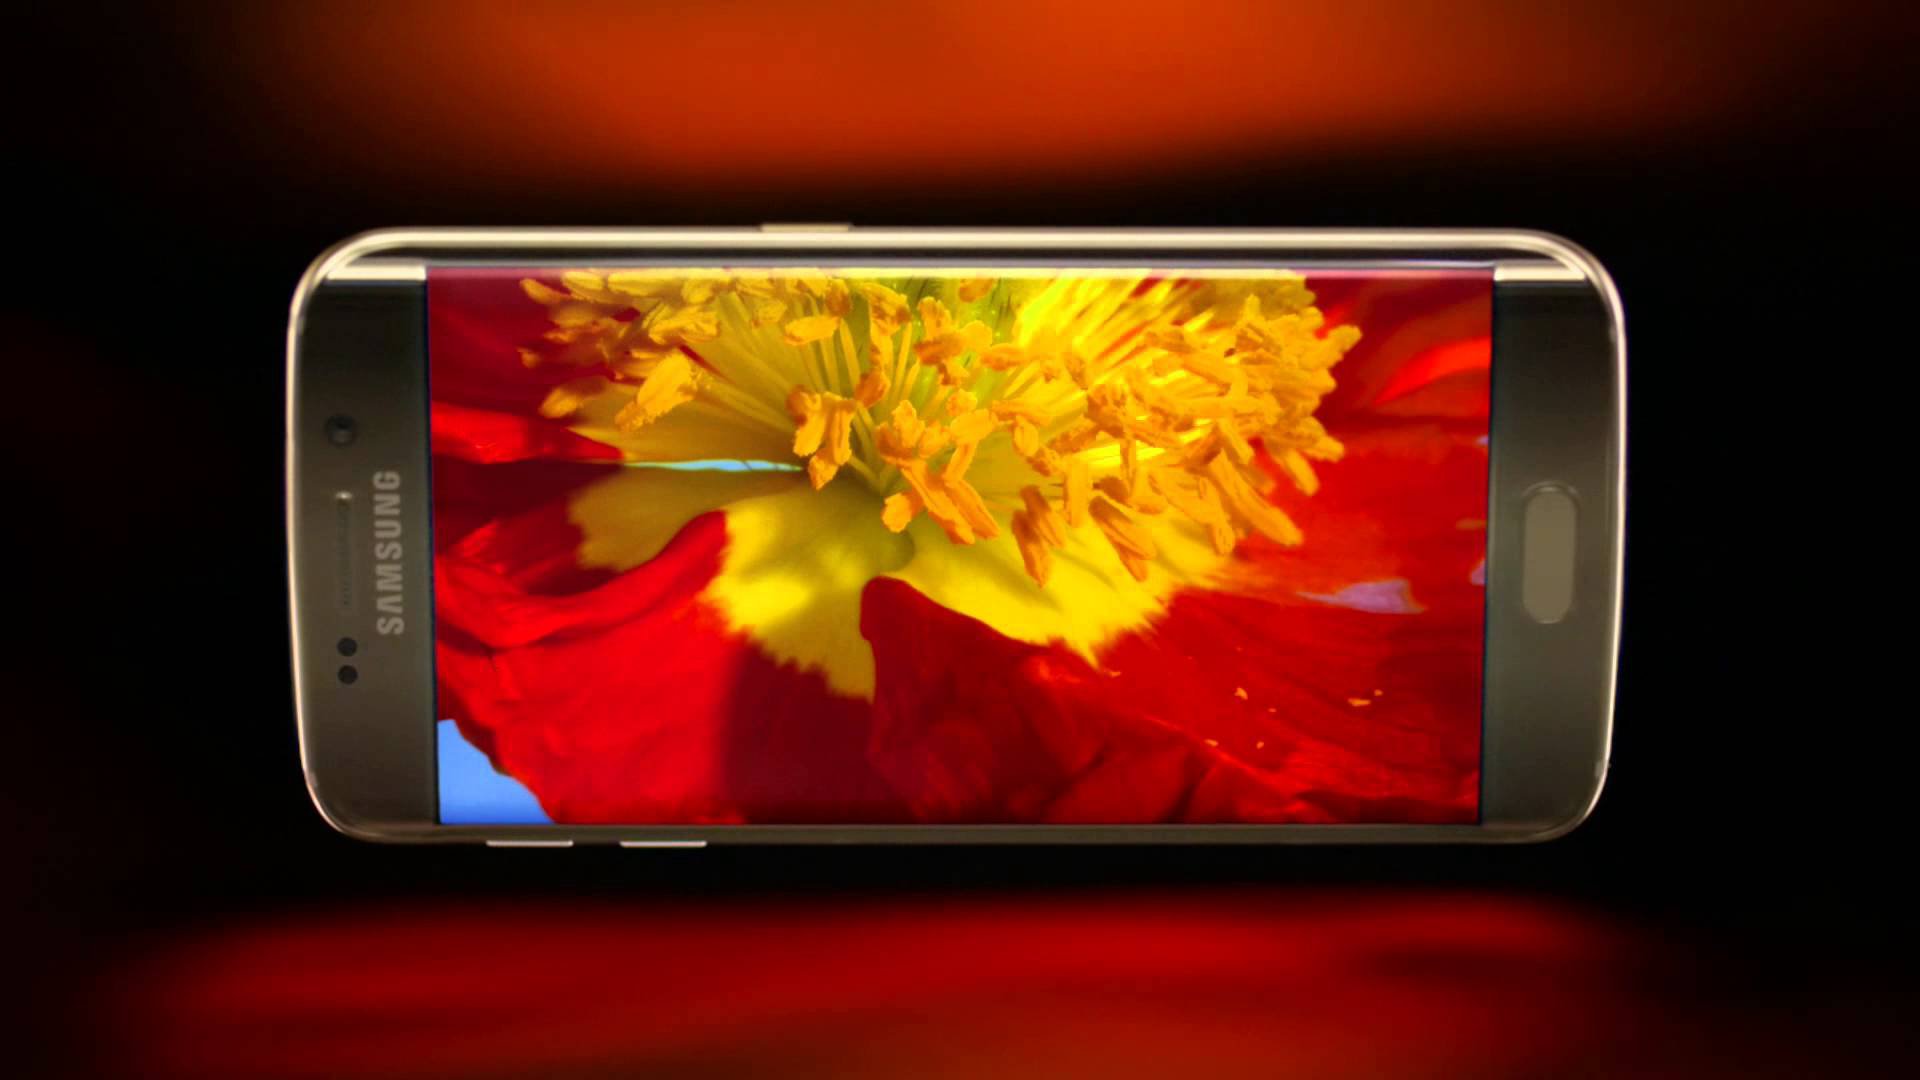 Samsung Galaxy S6 Edge - TV Commercial